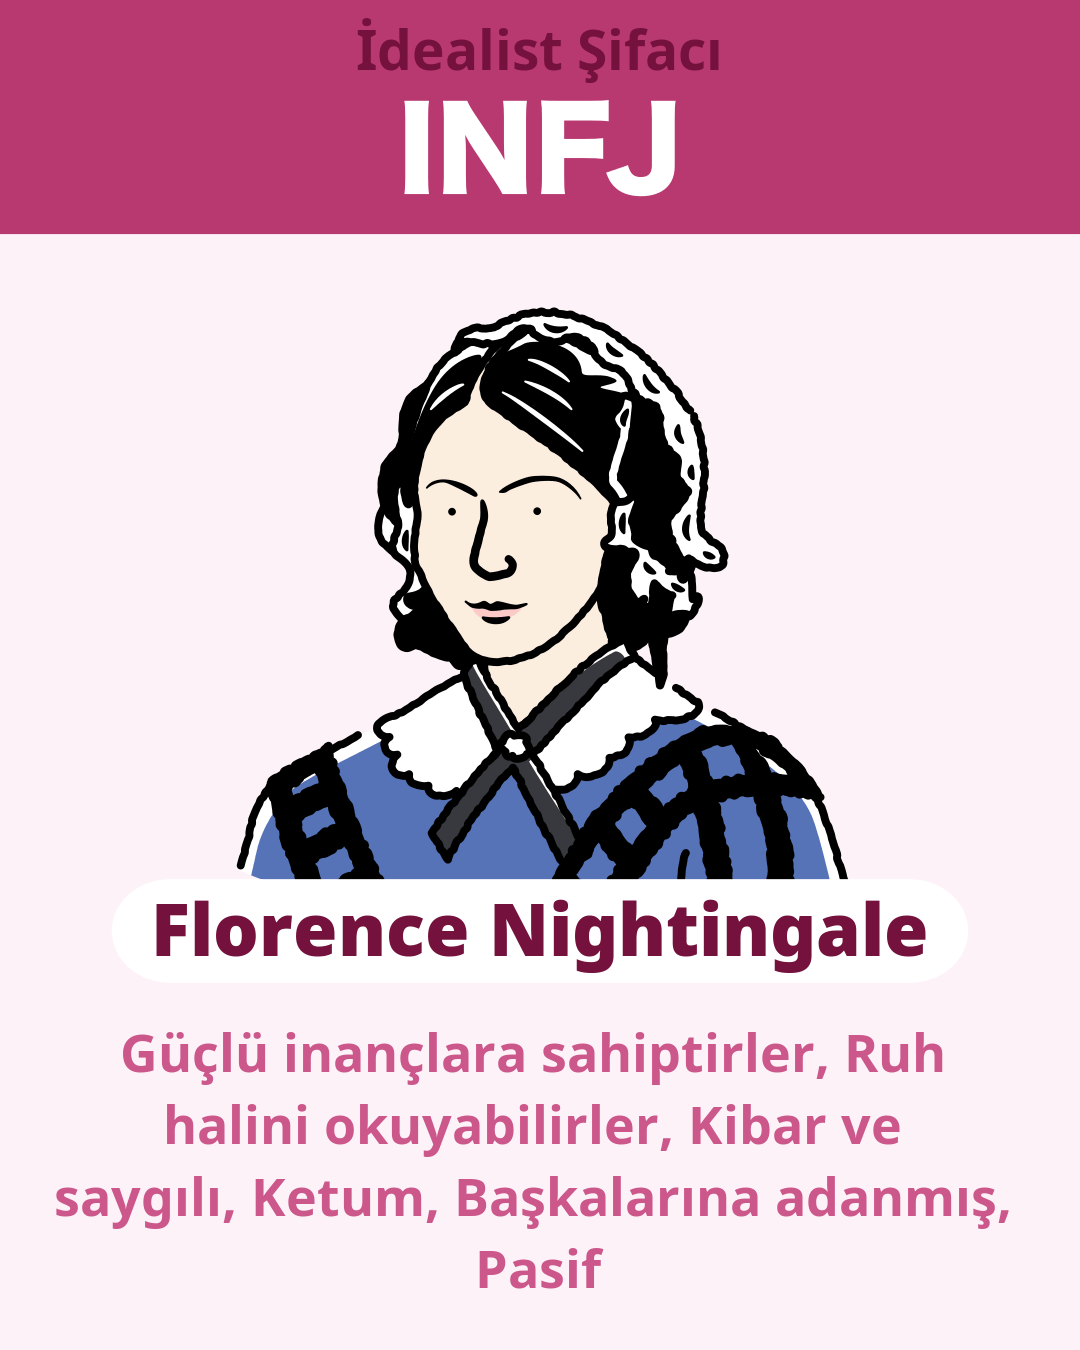 Florence Nightingale - INFJ